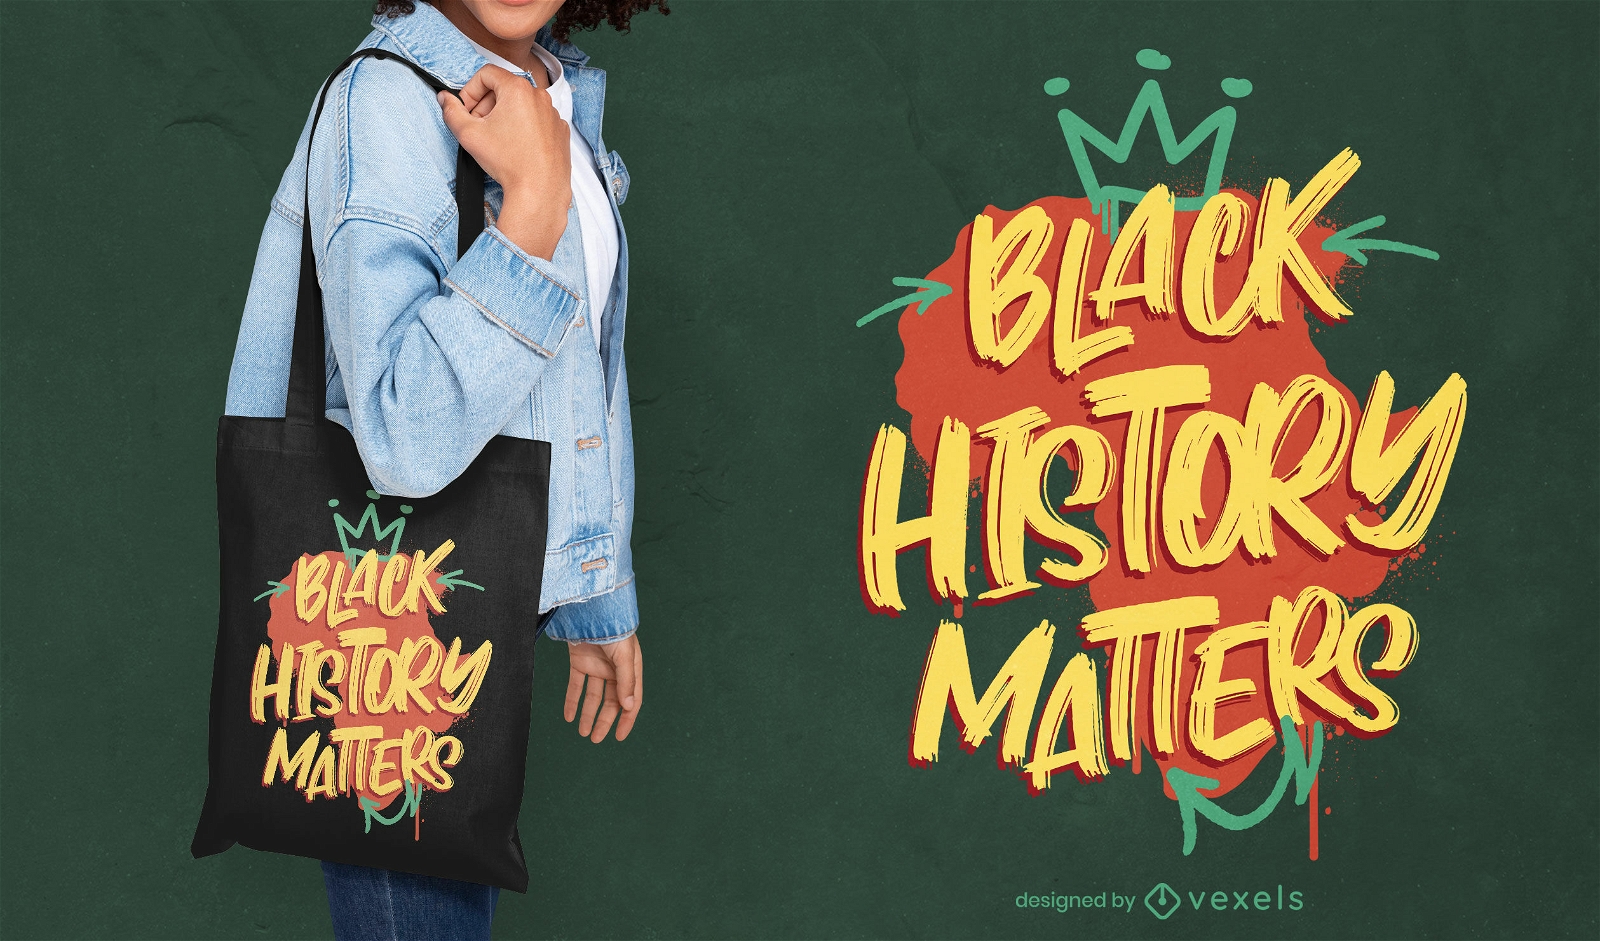 Black history matters tote bag design